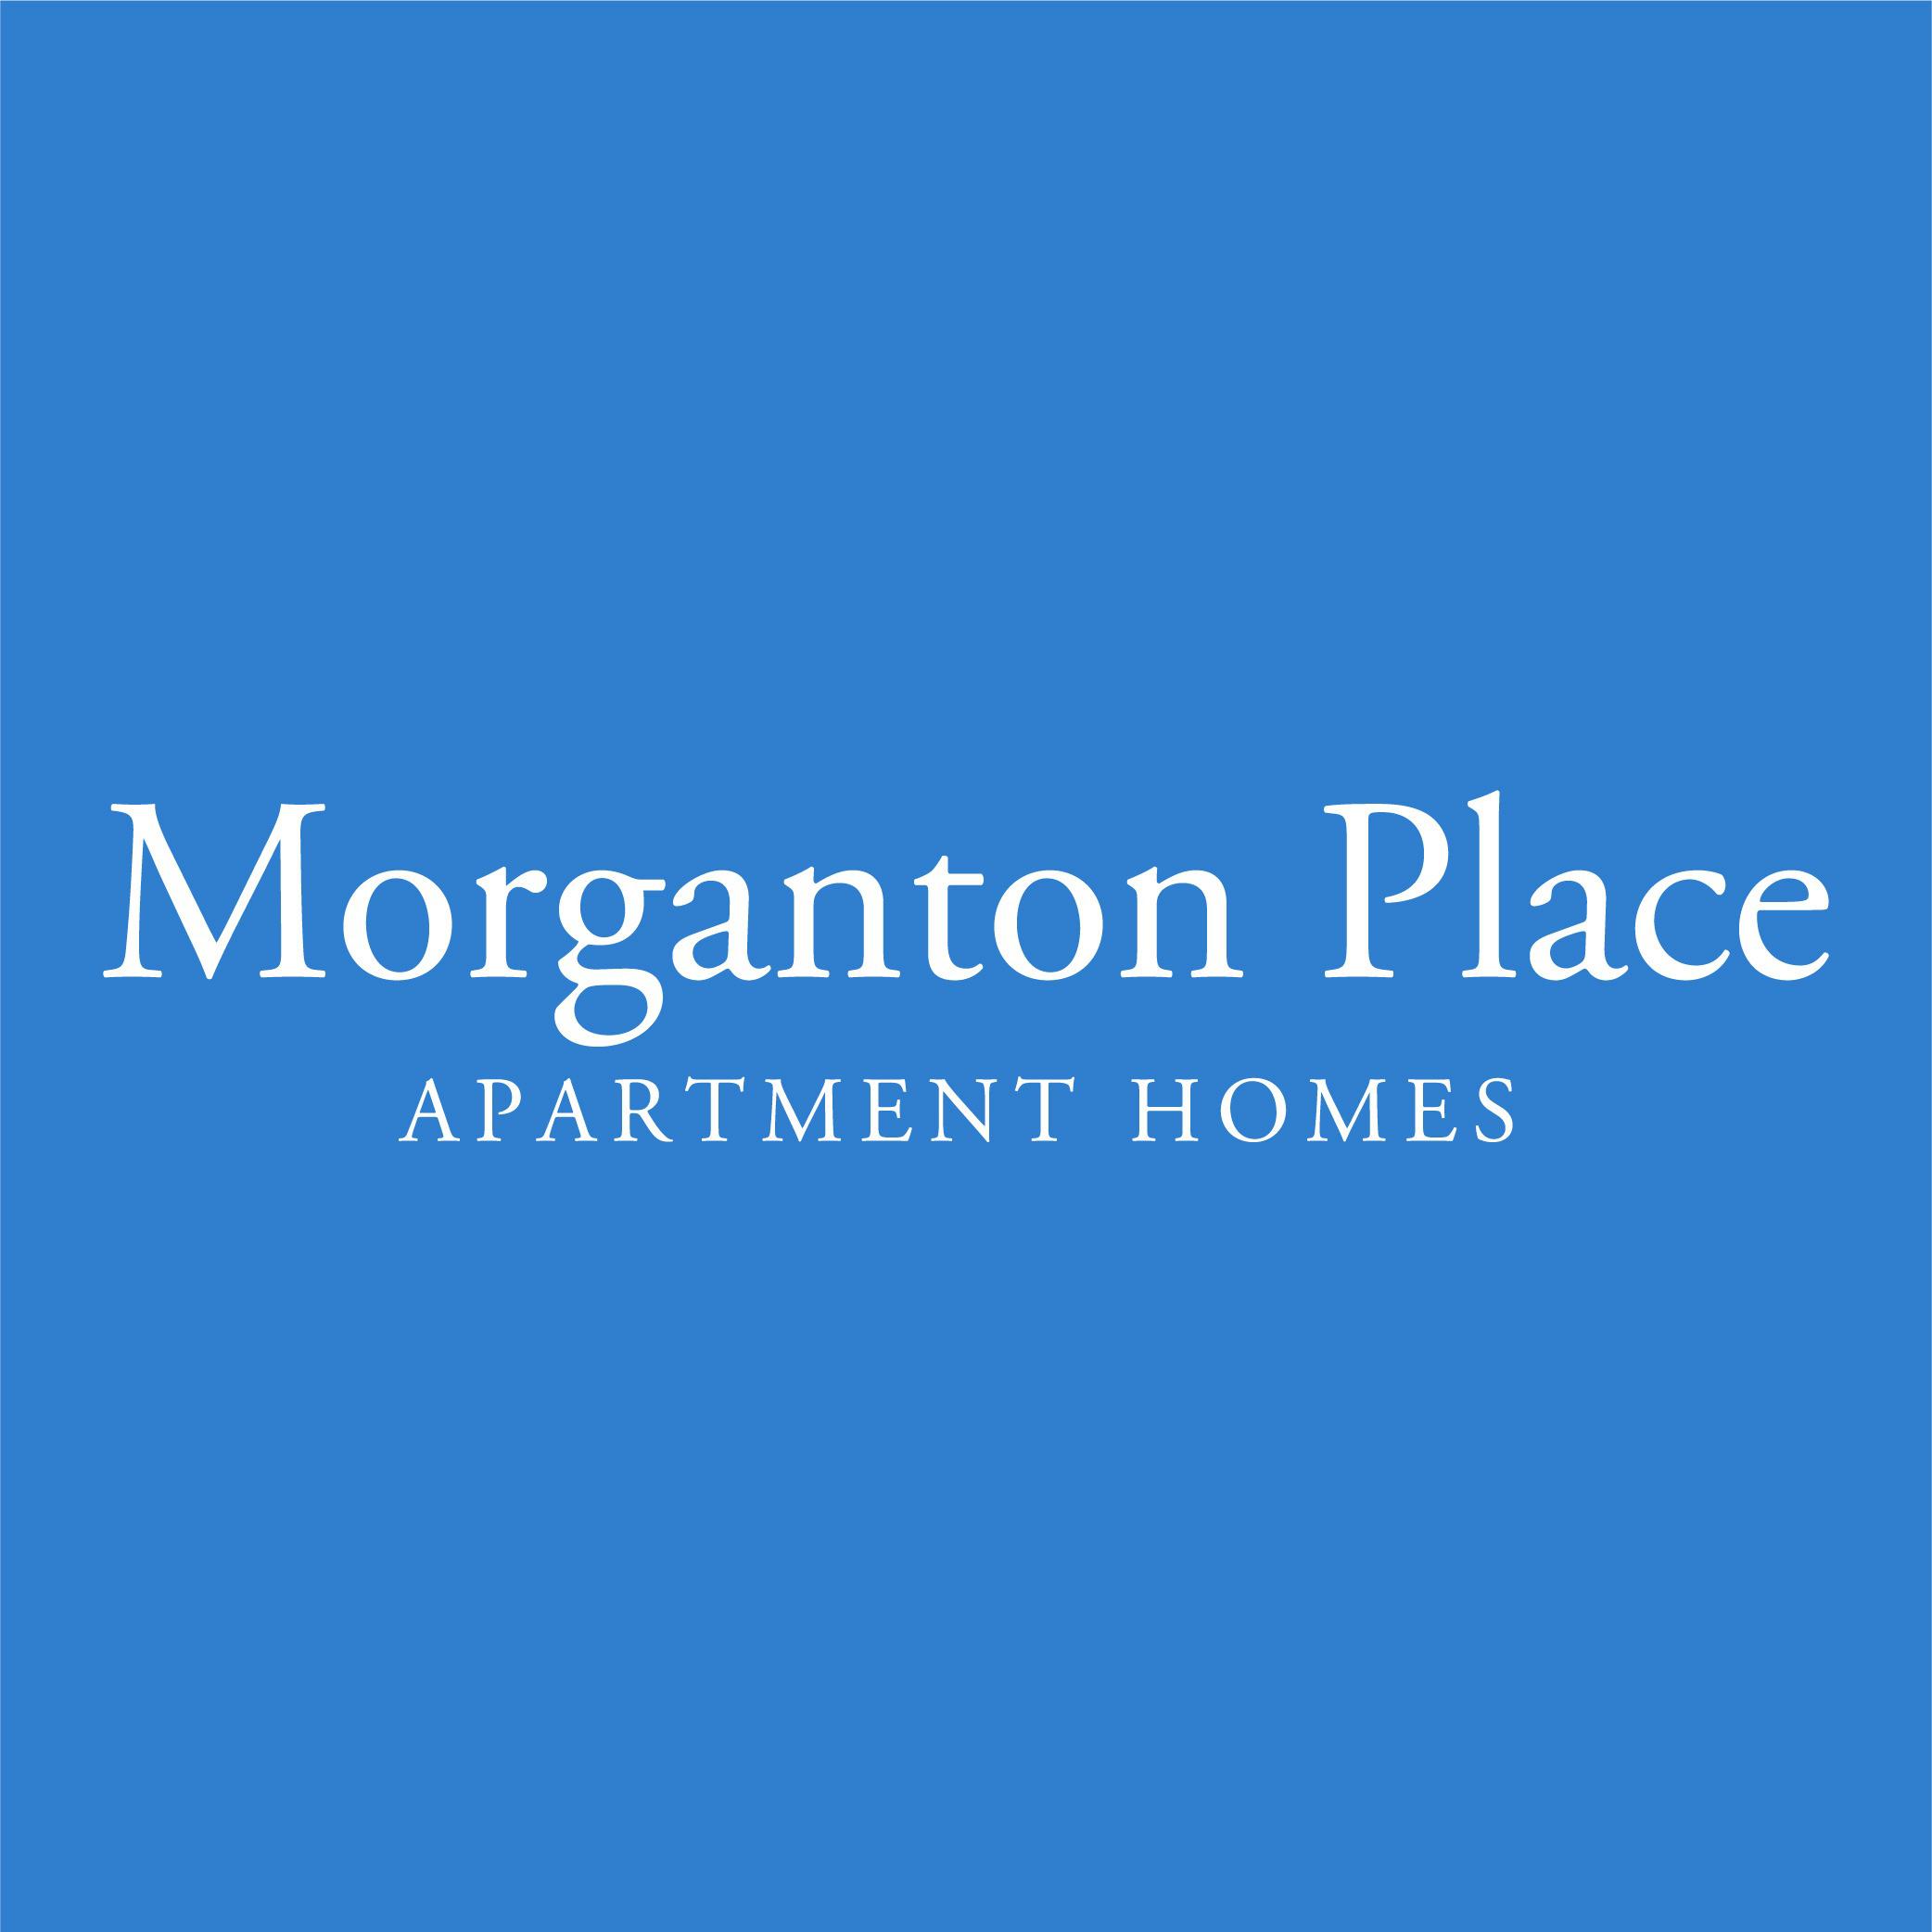 Morganton Place Apartment Homes